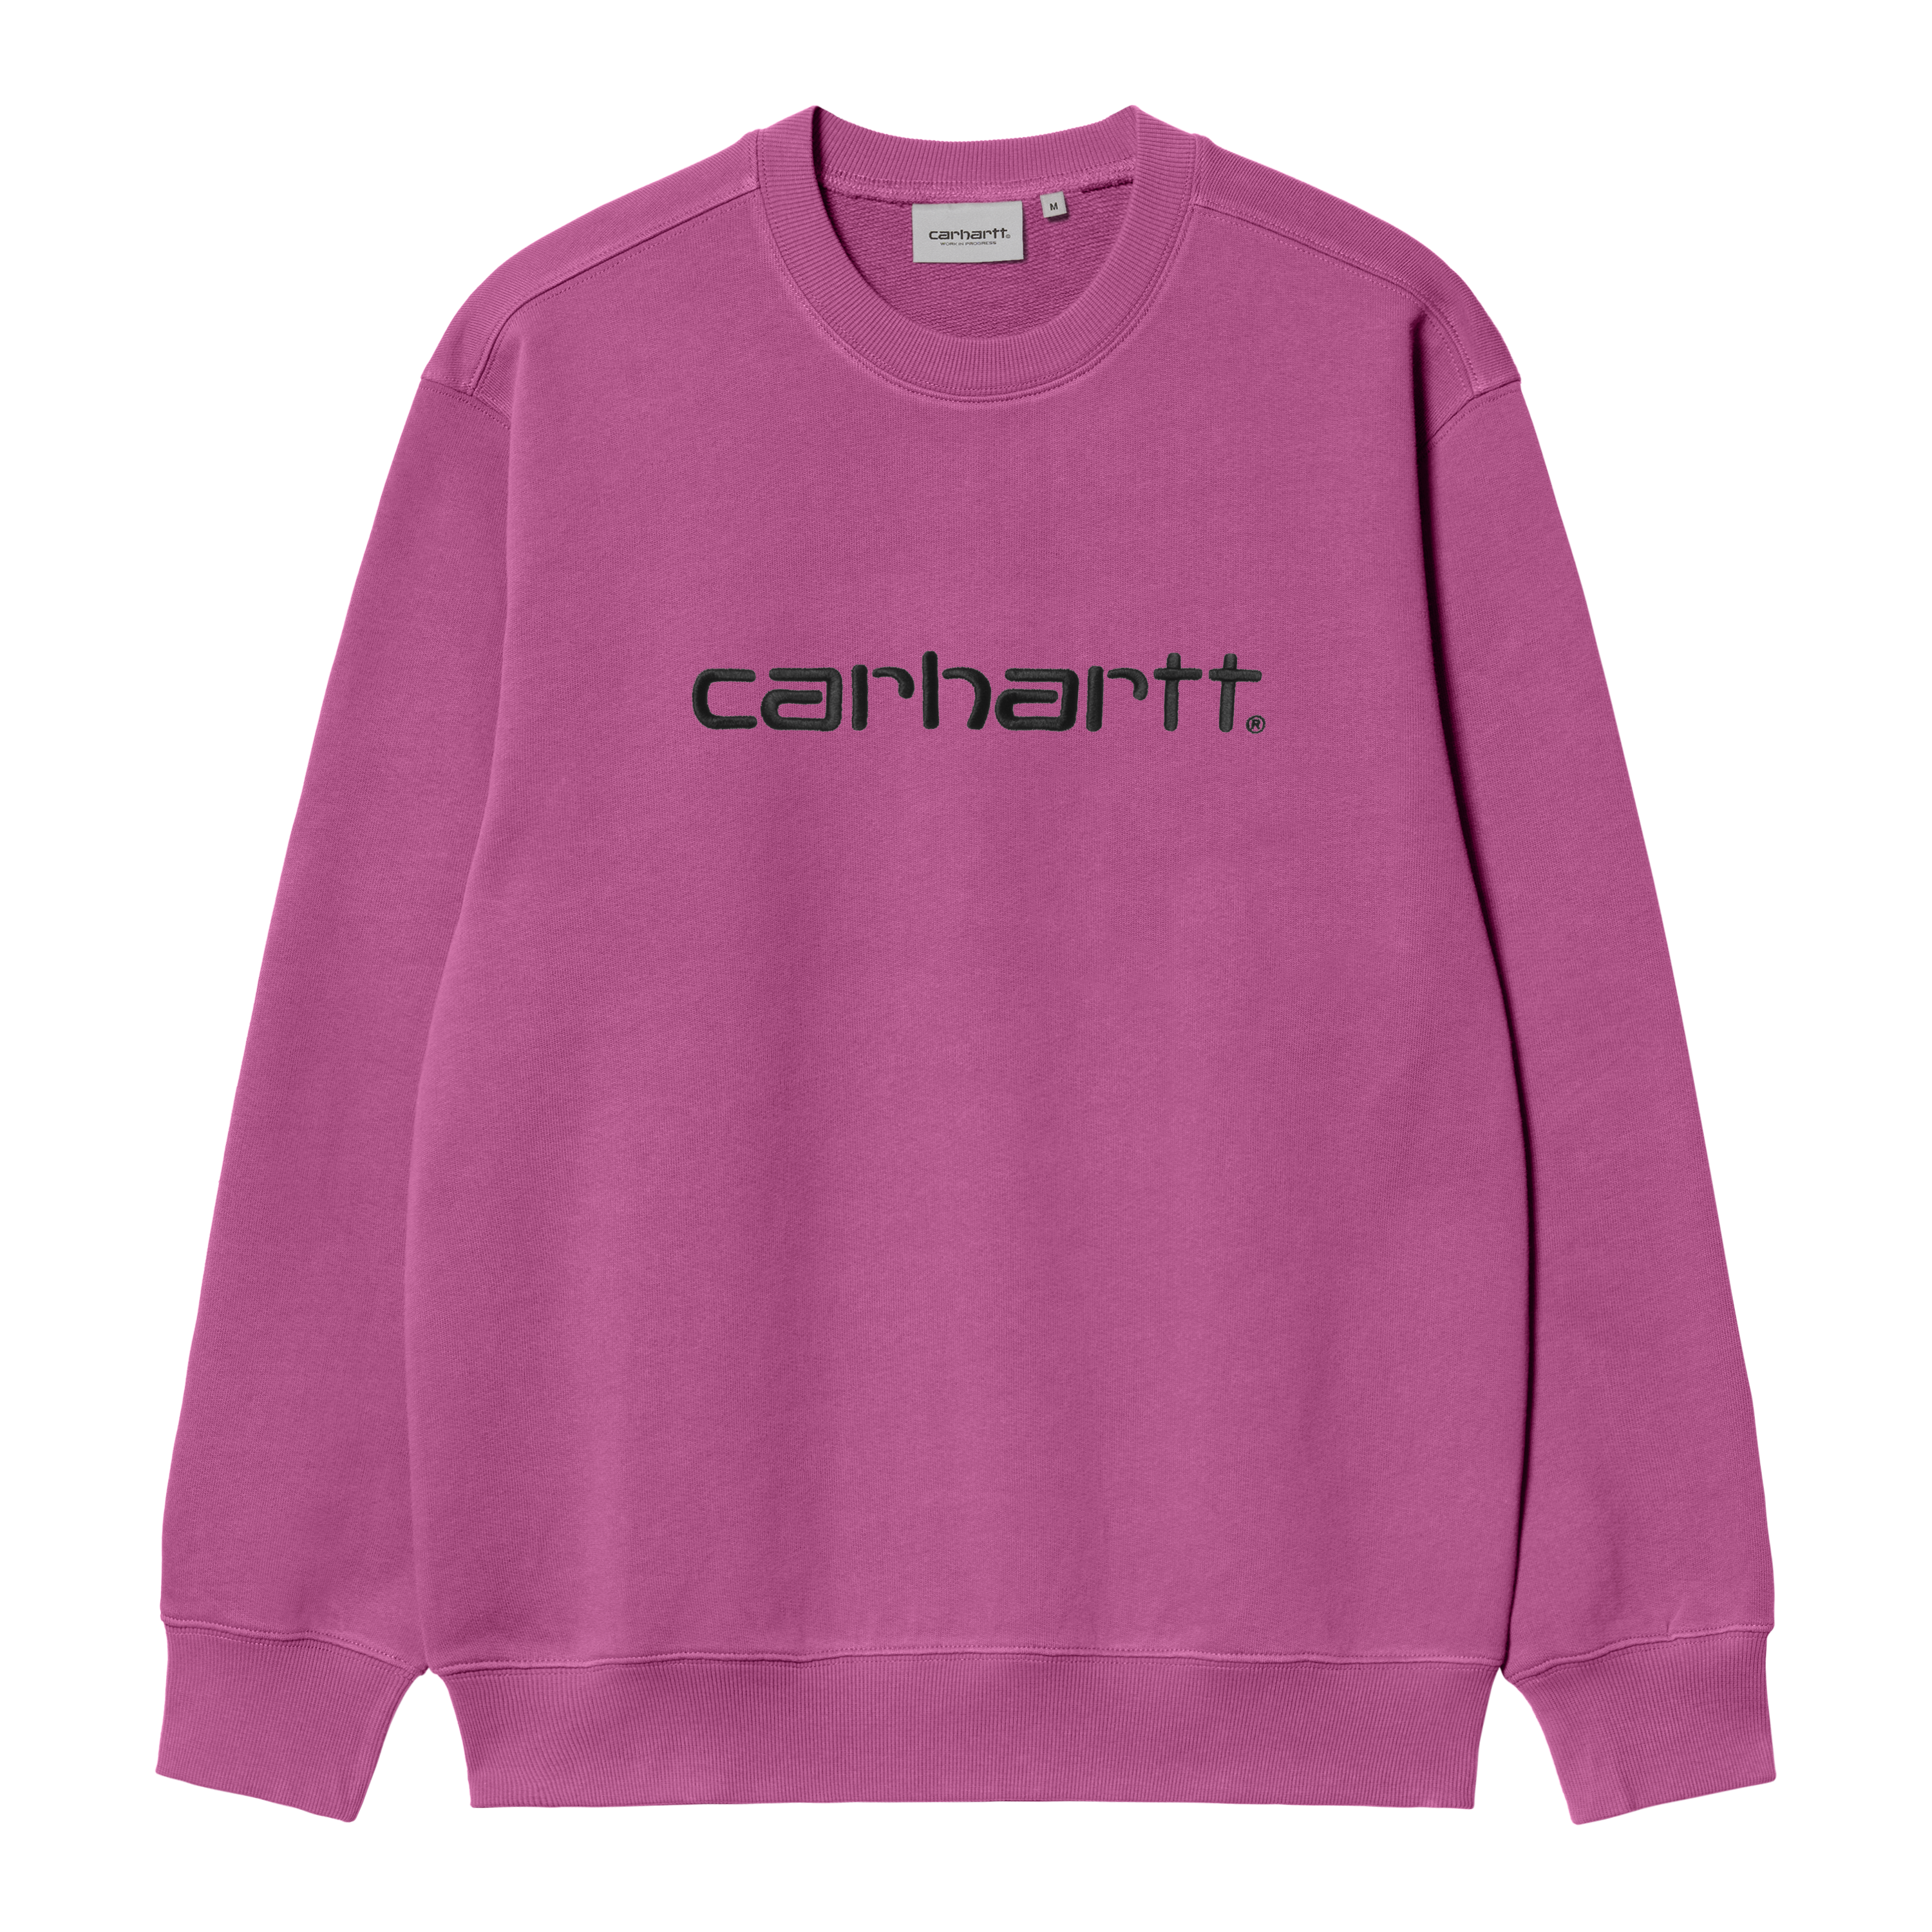 Carhartt WIP Carhartt Sweat in Pink